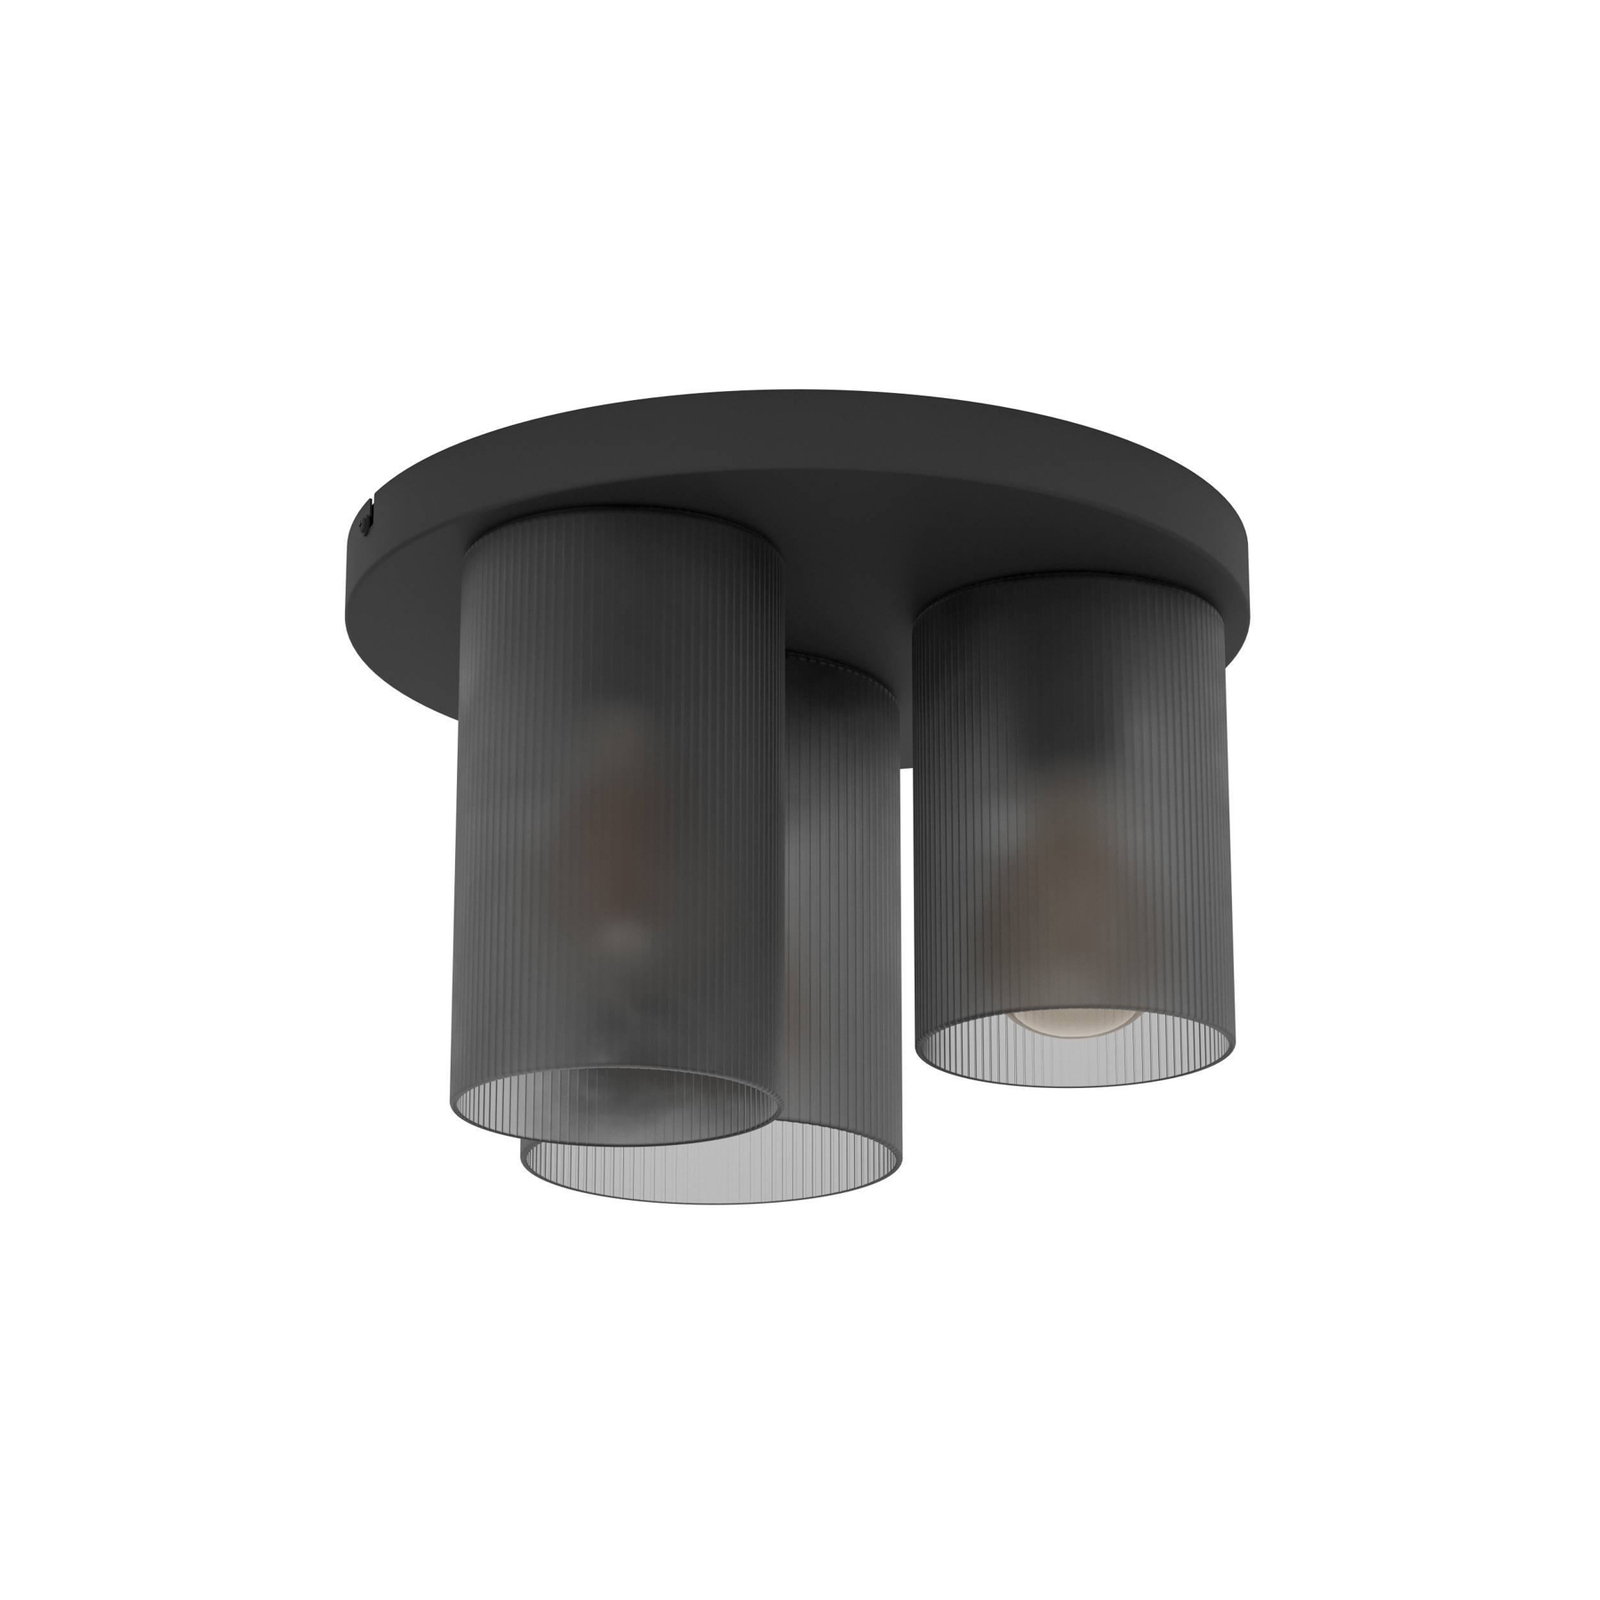 Colomera plafondlamp, zwart/grijs, 3-lamps.